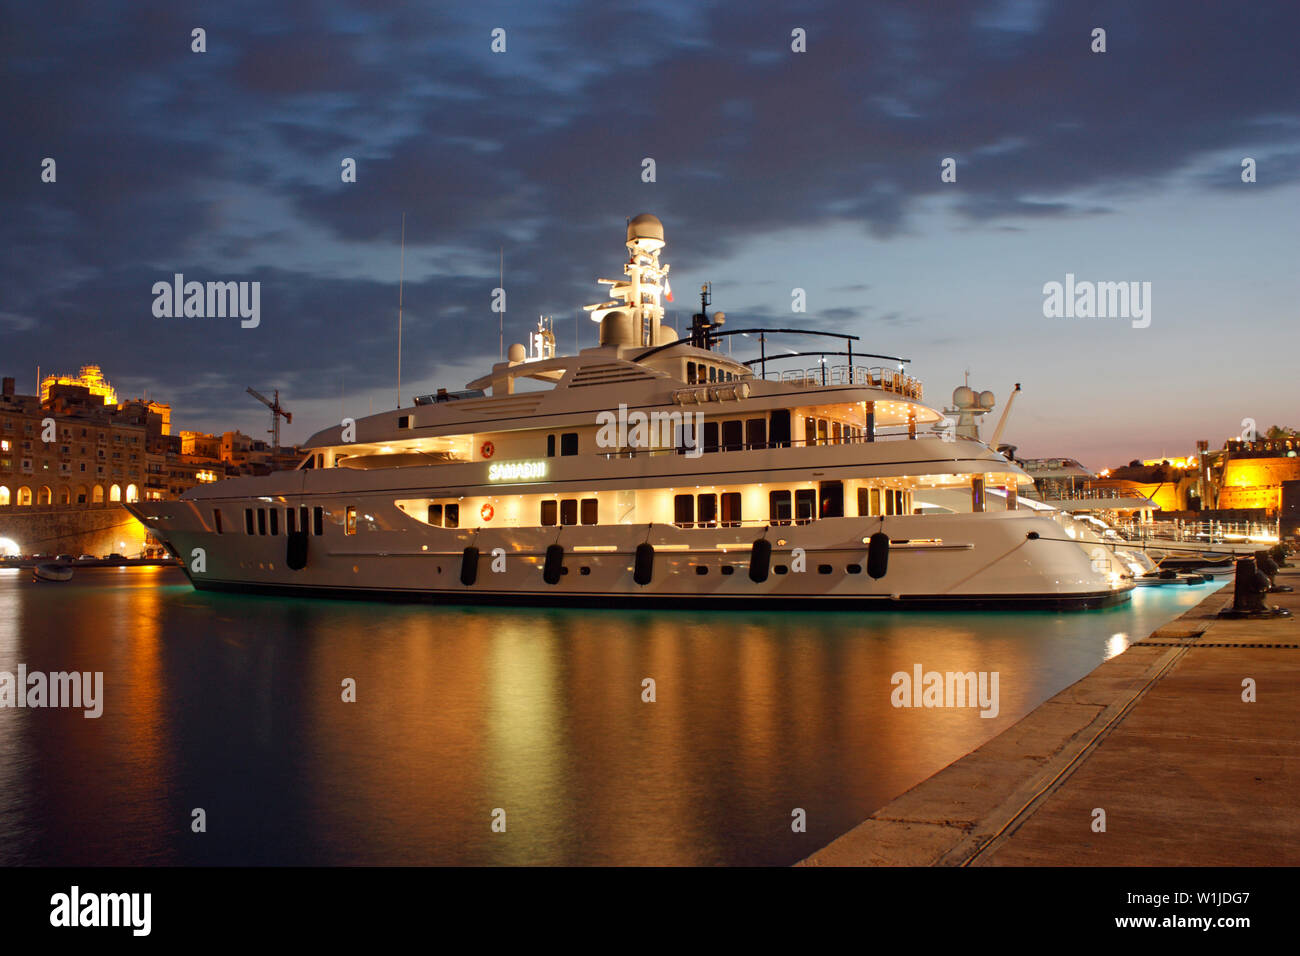 The large Feadship luxury yacht Samadhi in the Grand Harbour Yacht Marina, Malta, at night Stock Photo